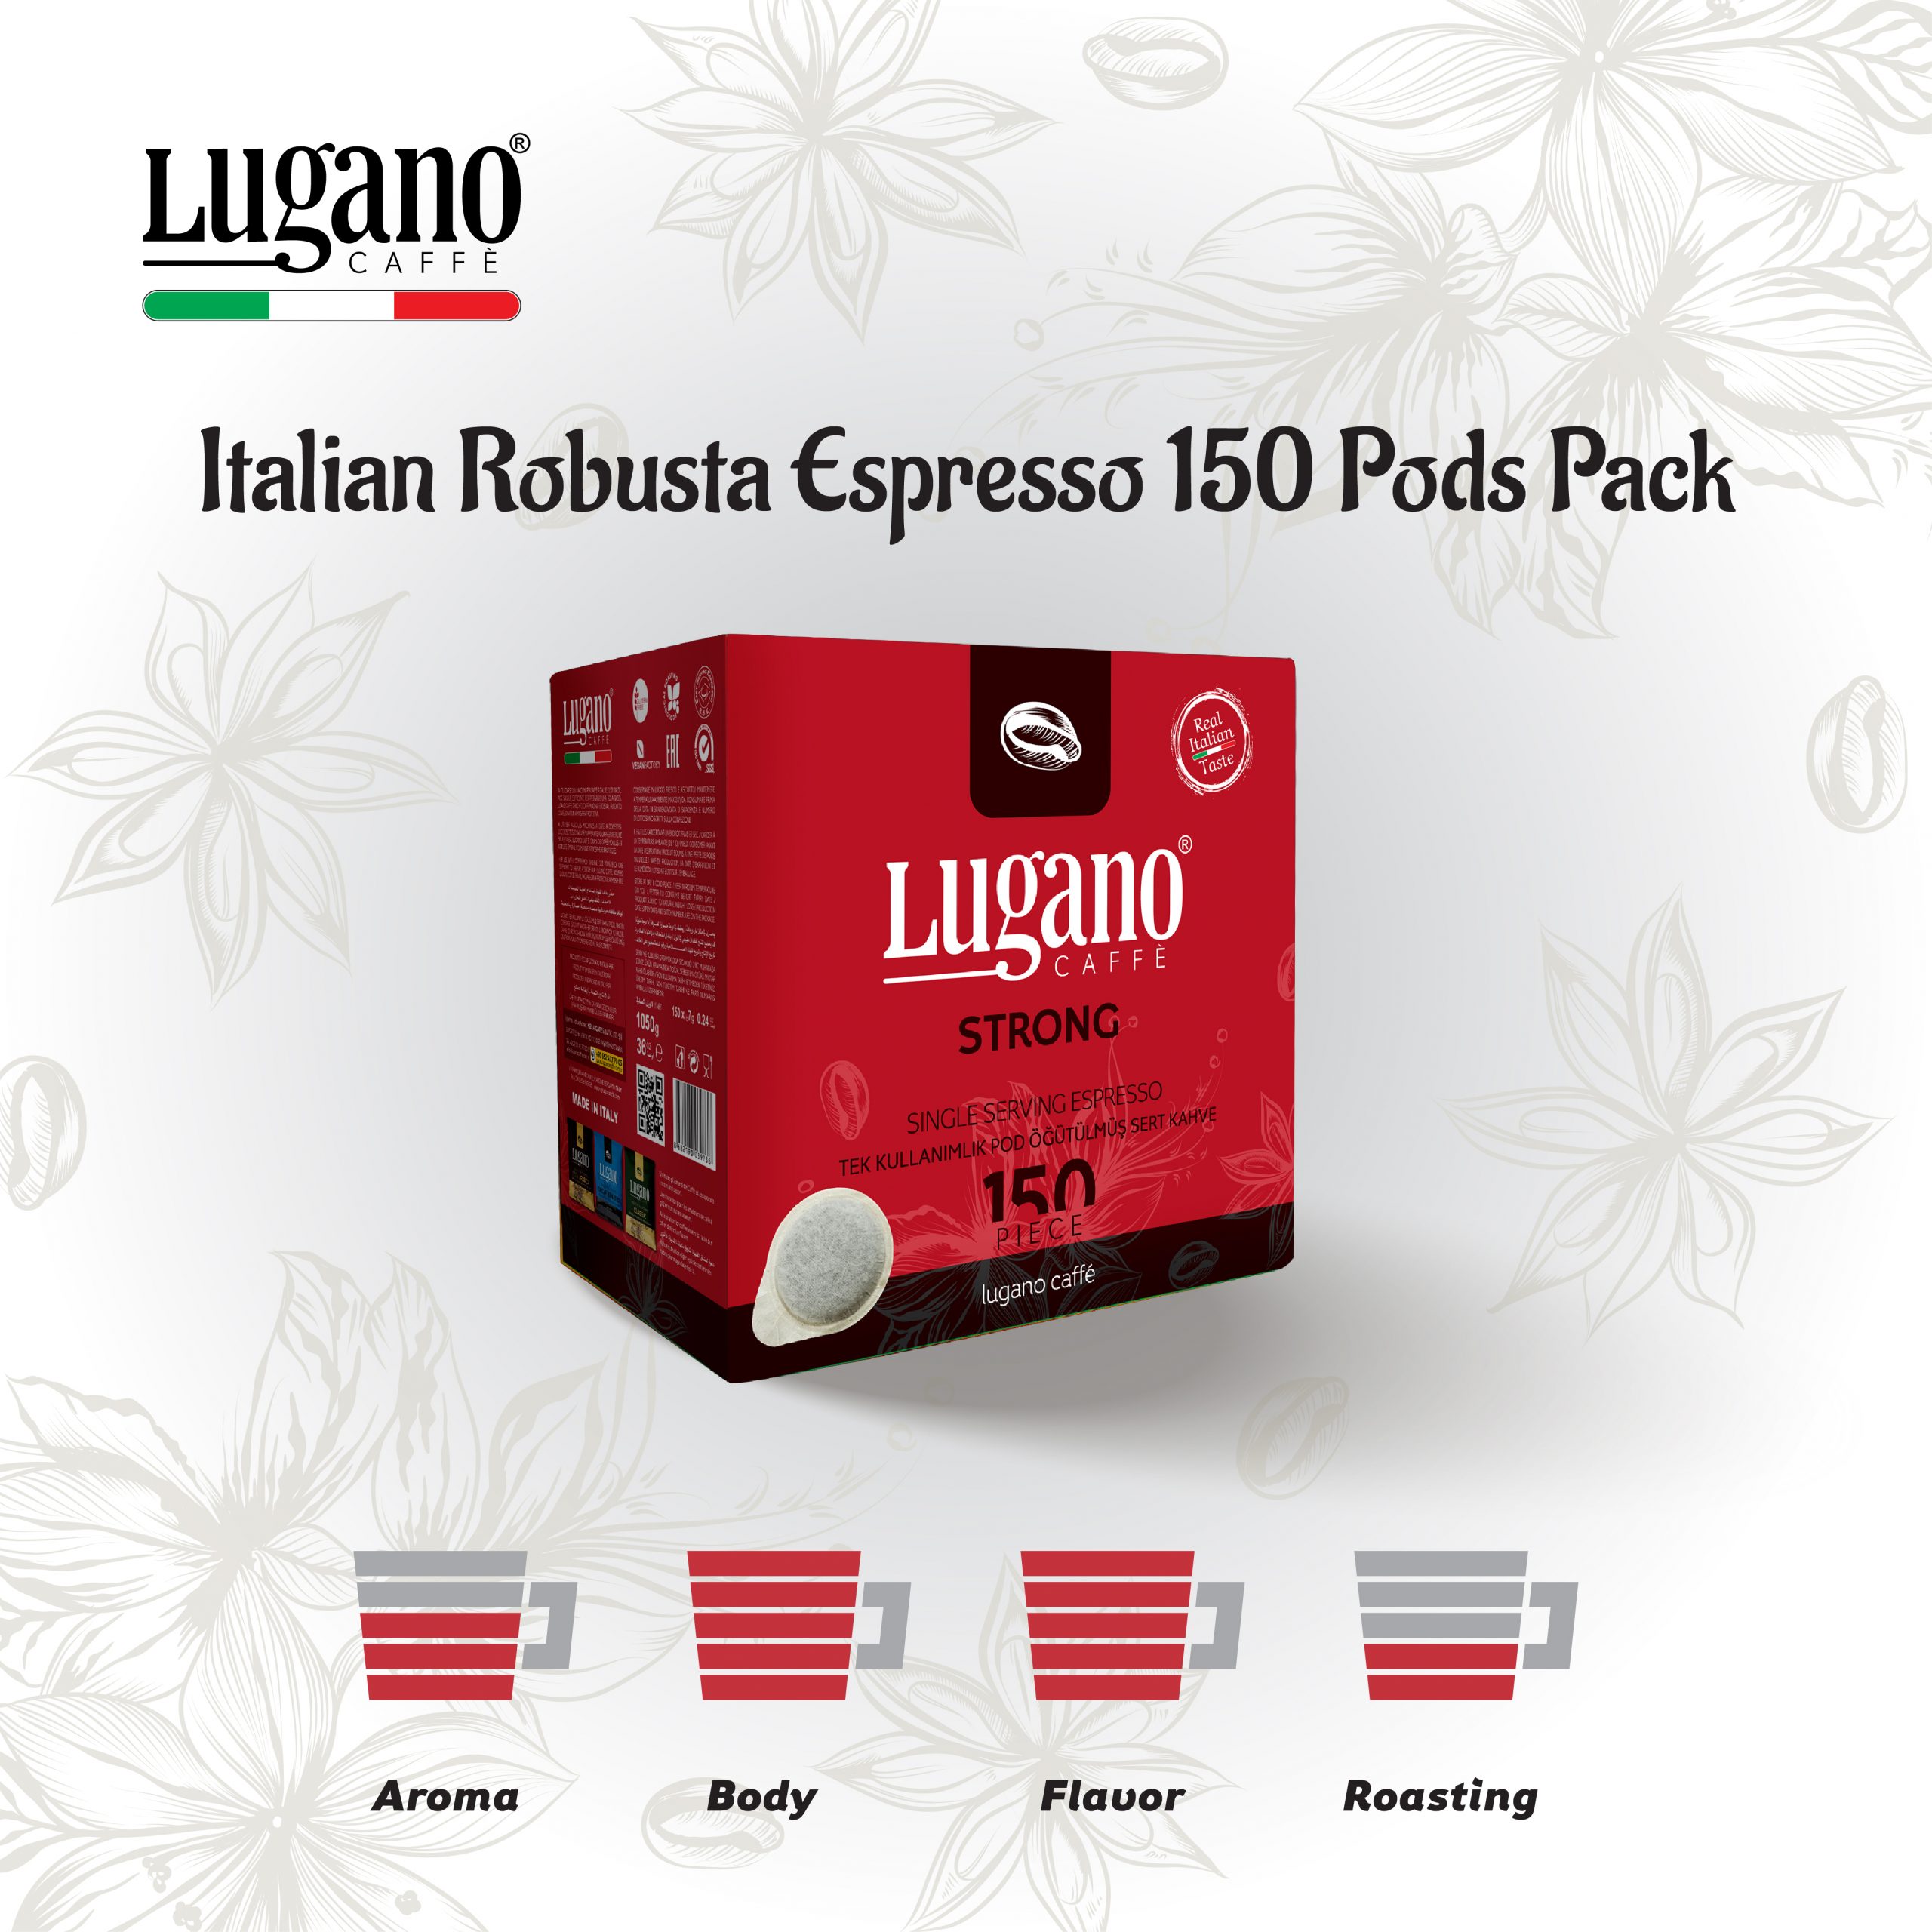 Italian Robusta Espresso 150 Pods Packs